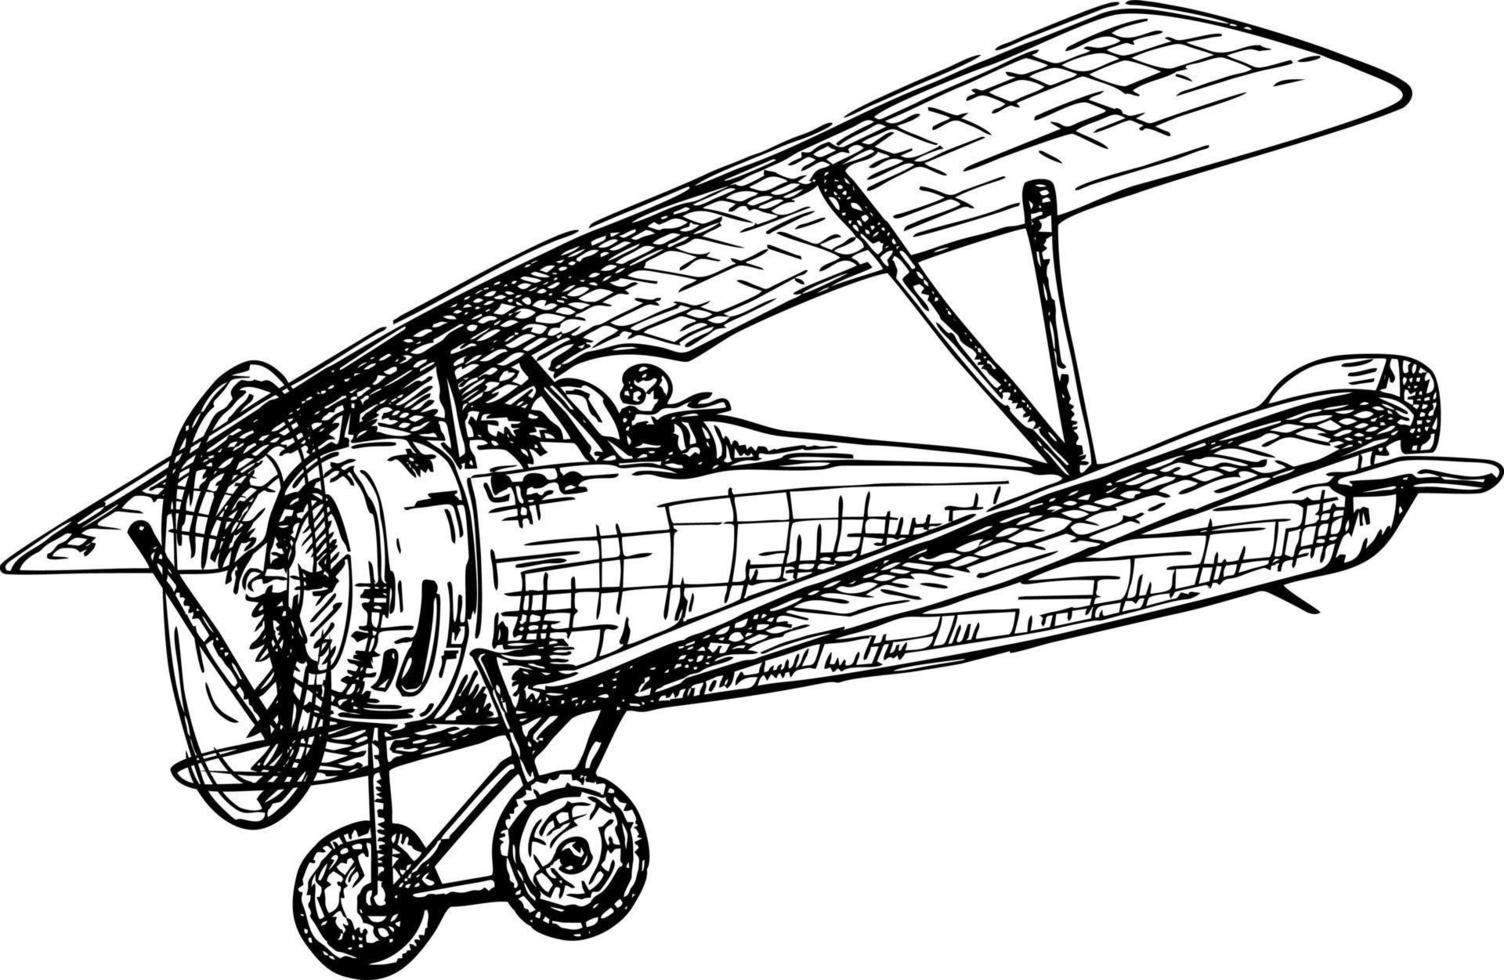 Biplane flying. Vintage hand drawn biplane. Vector airplane illustration. An old airplane. Retro plane sketch